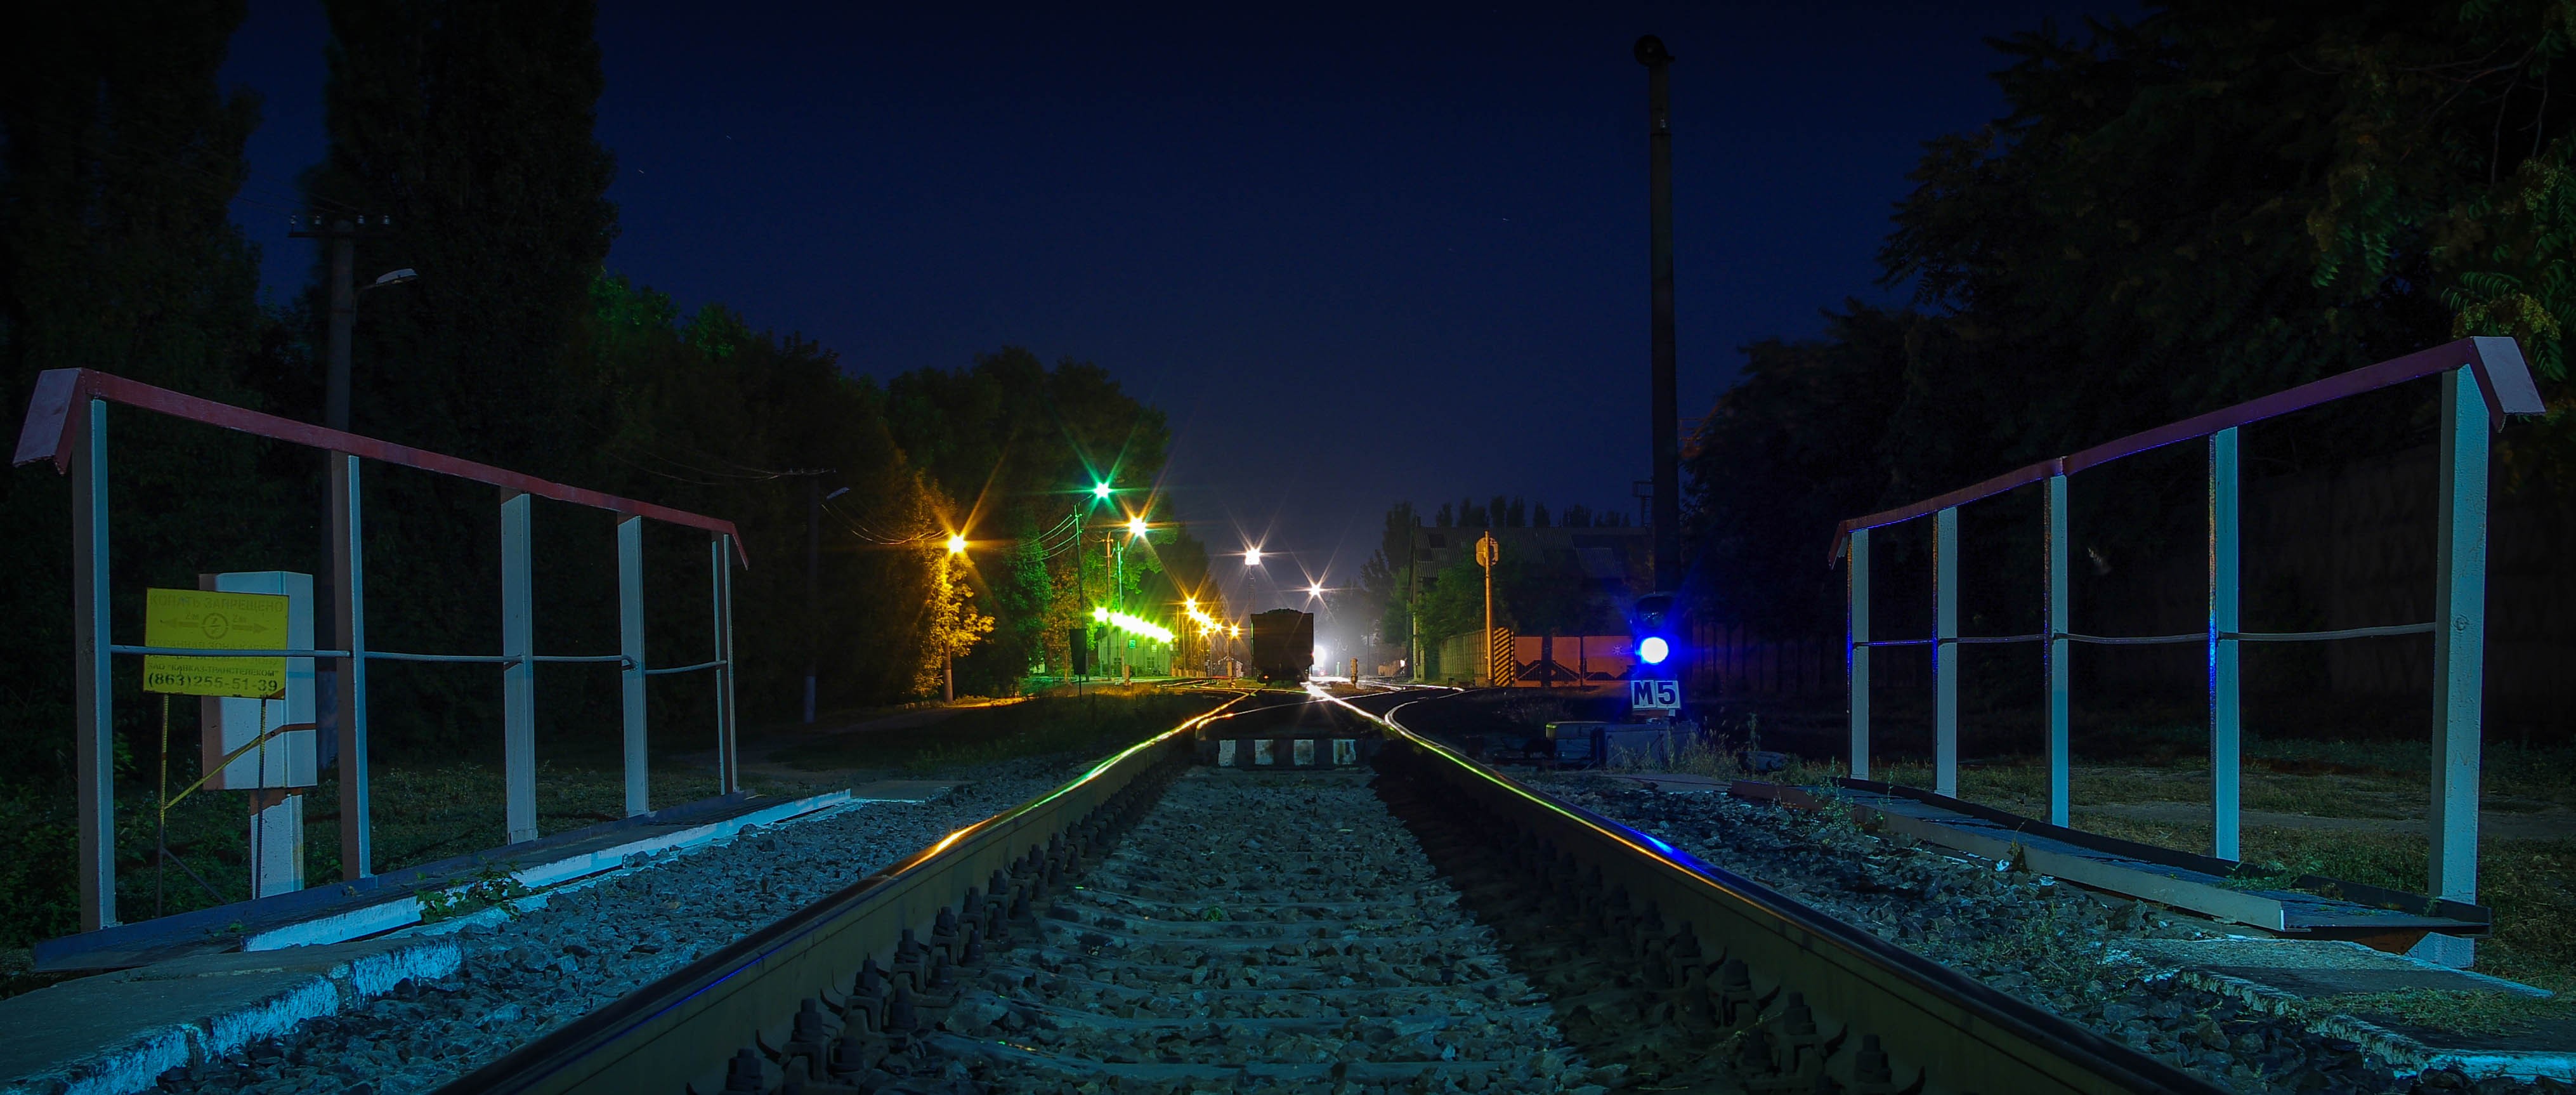 Railway Crossing Night Lights Metal Railroad Track 4061x1726